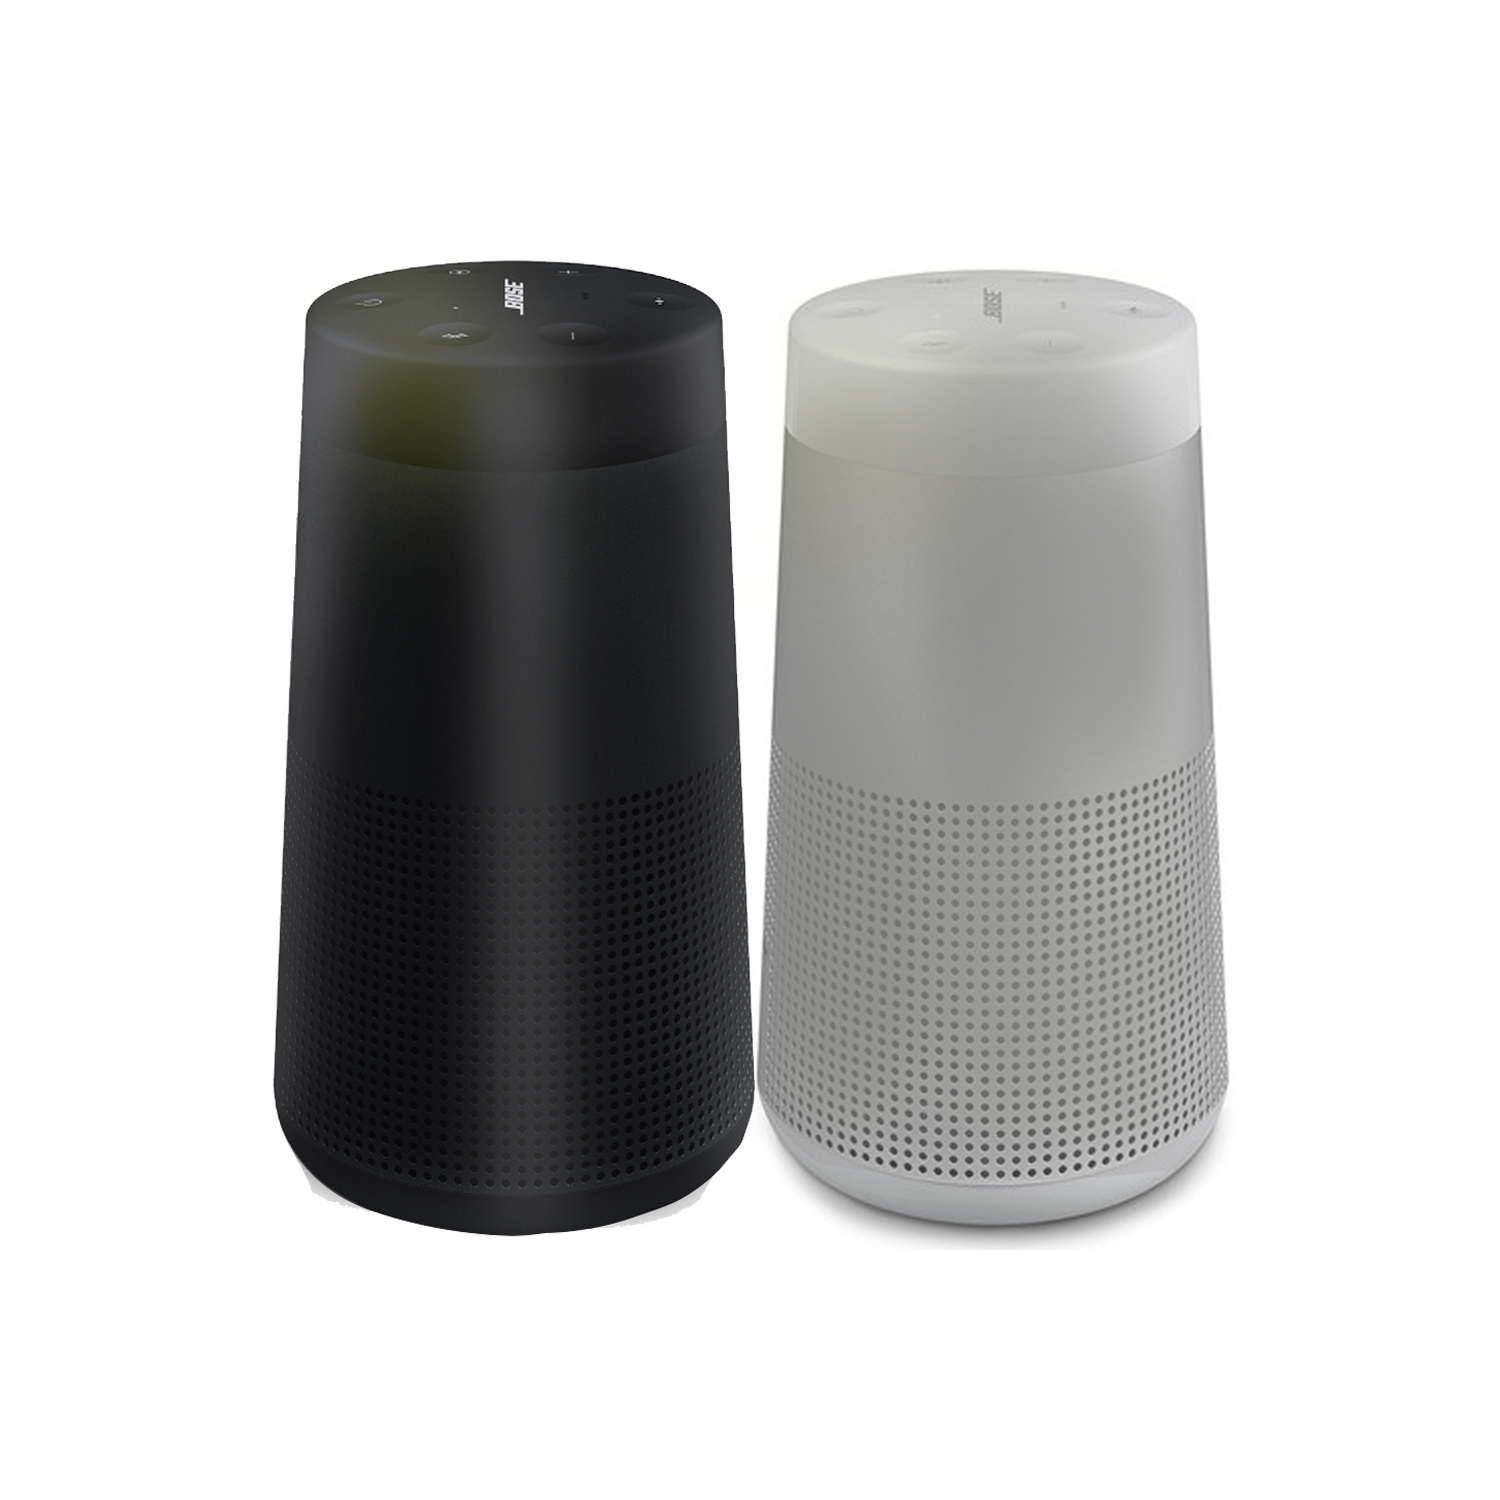 Bose SoundLink Revolve Bluetooth Speaker Triple Black and Lux Gray Speaker